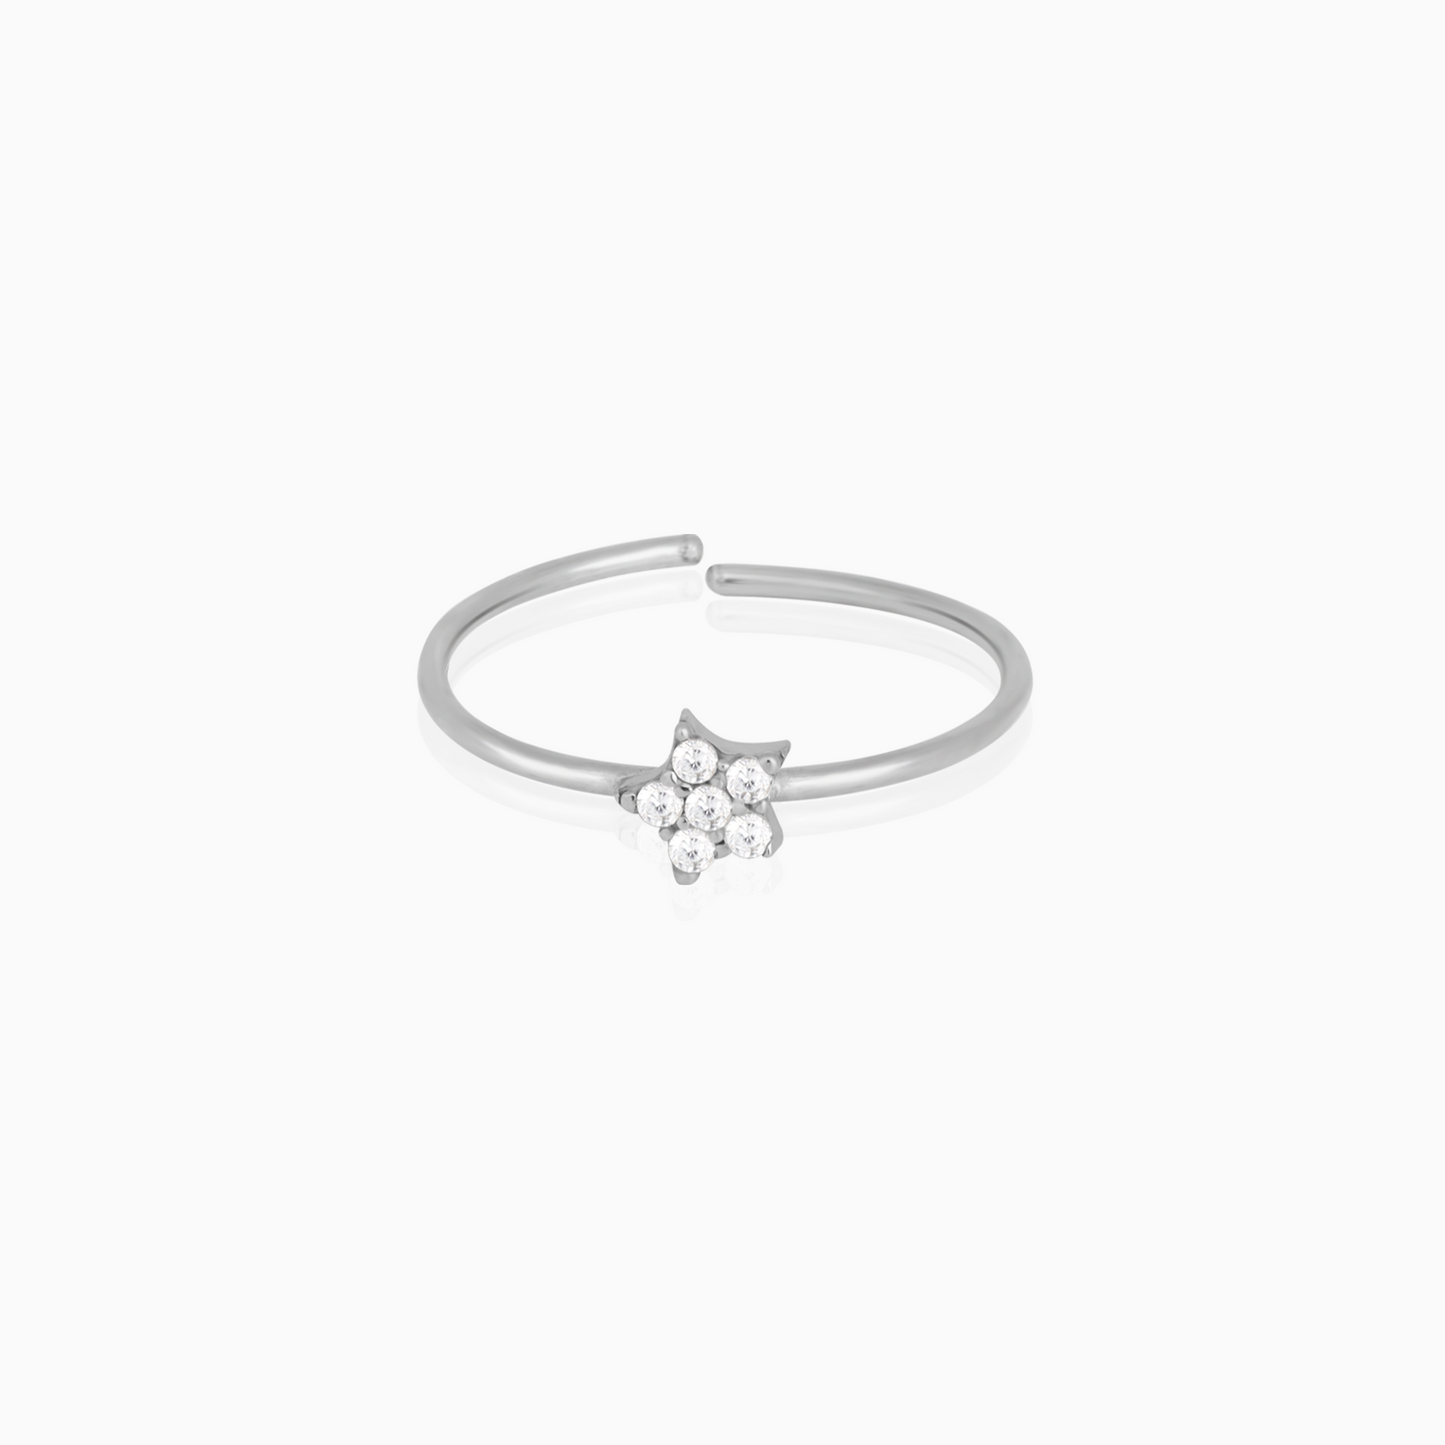 Silver Zircon Constellation Ring